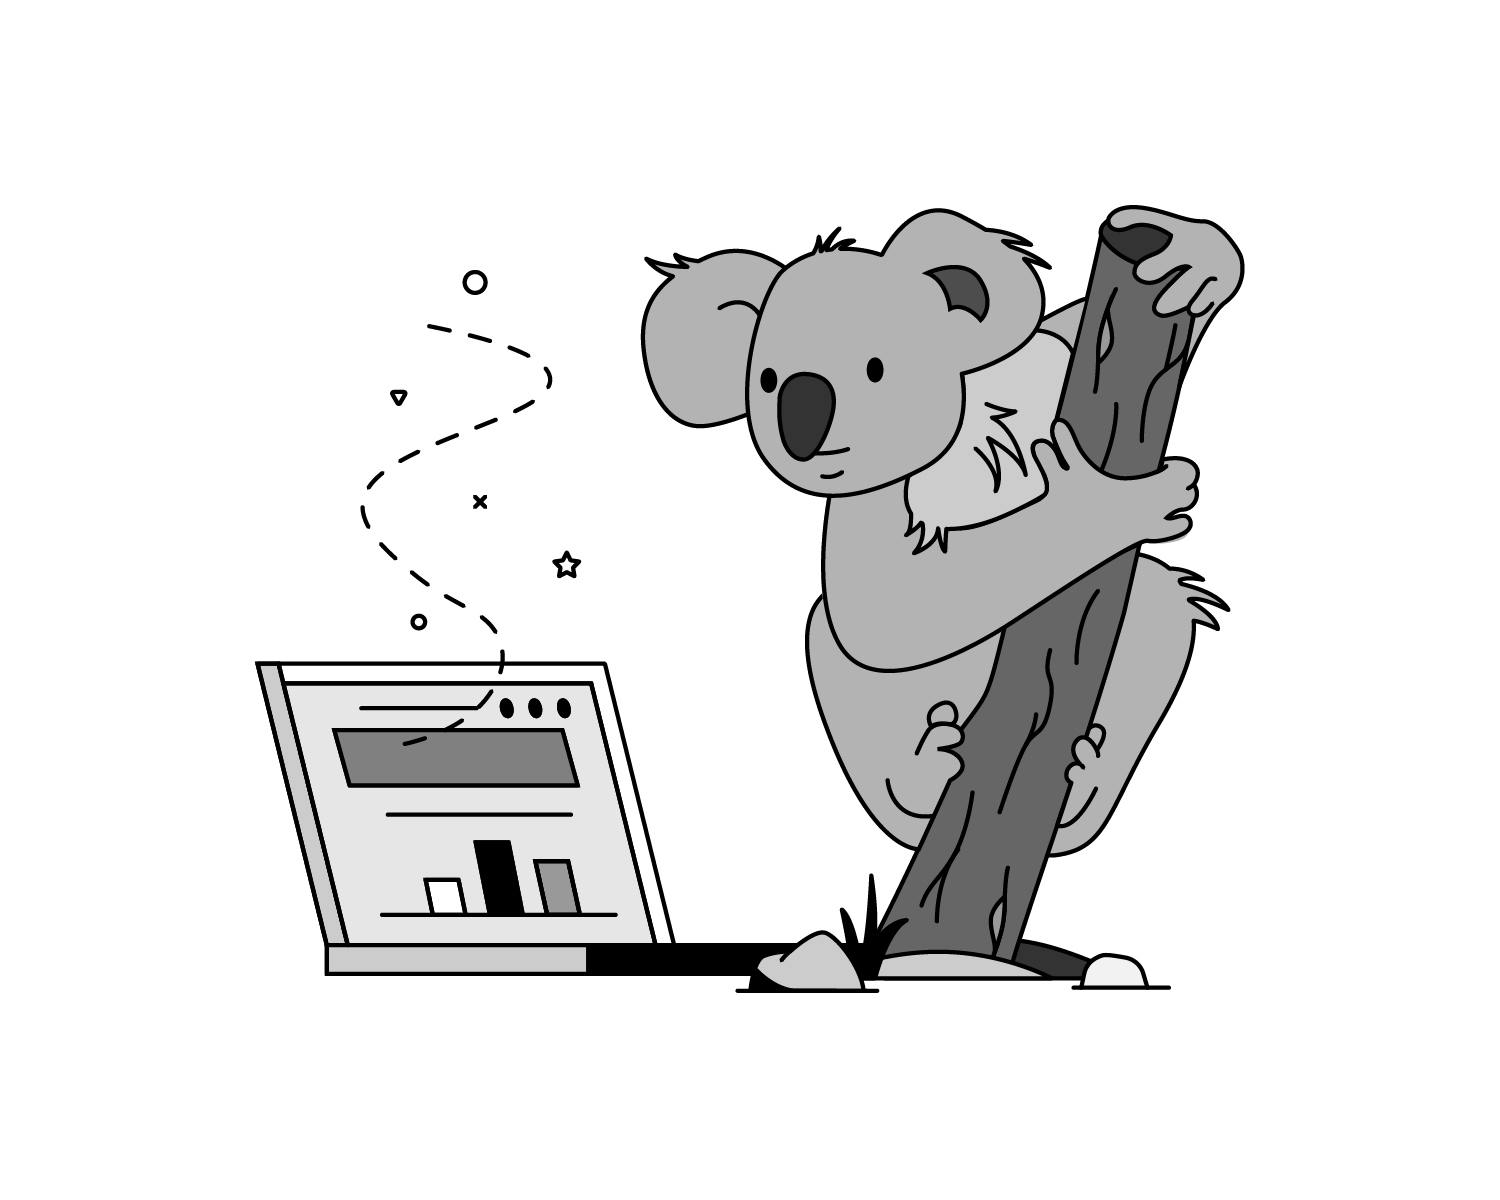 A koala glancing thoughtfully at a laptop